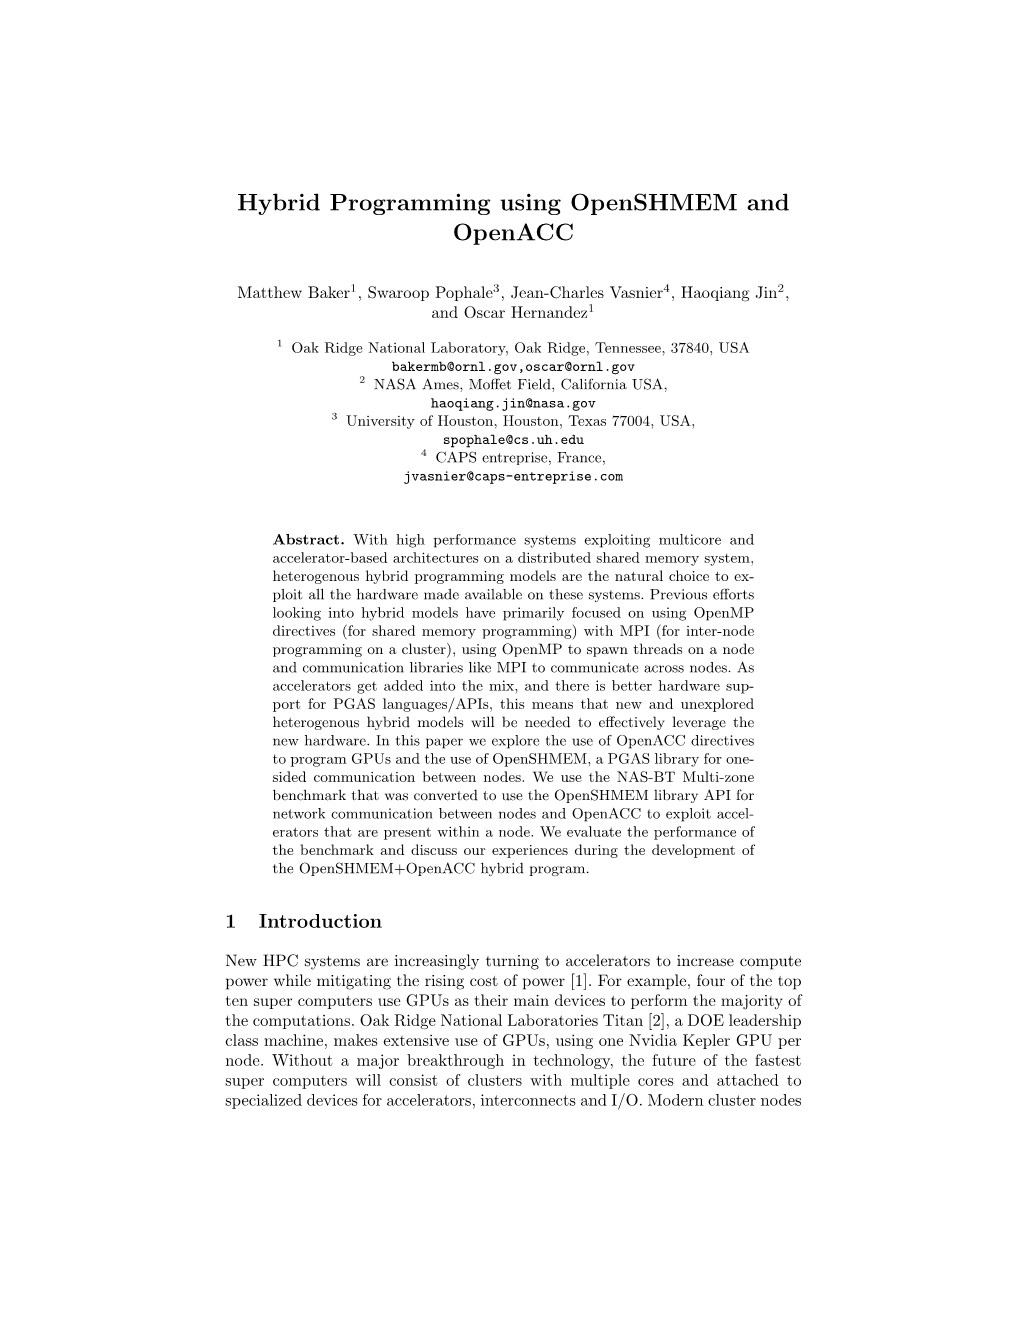 Hybrid Programming Using Openshmem and Openacc